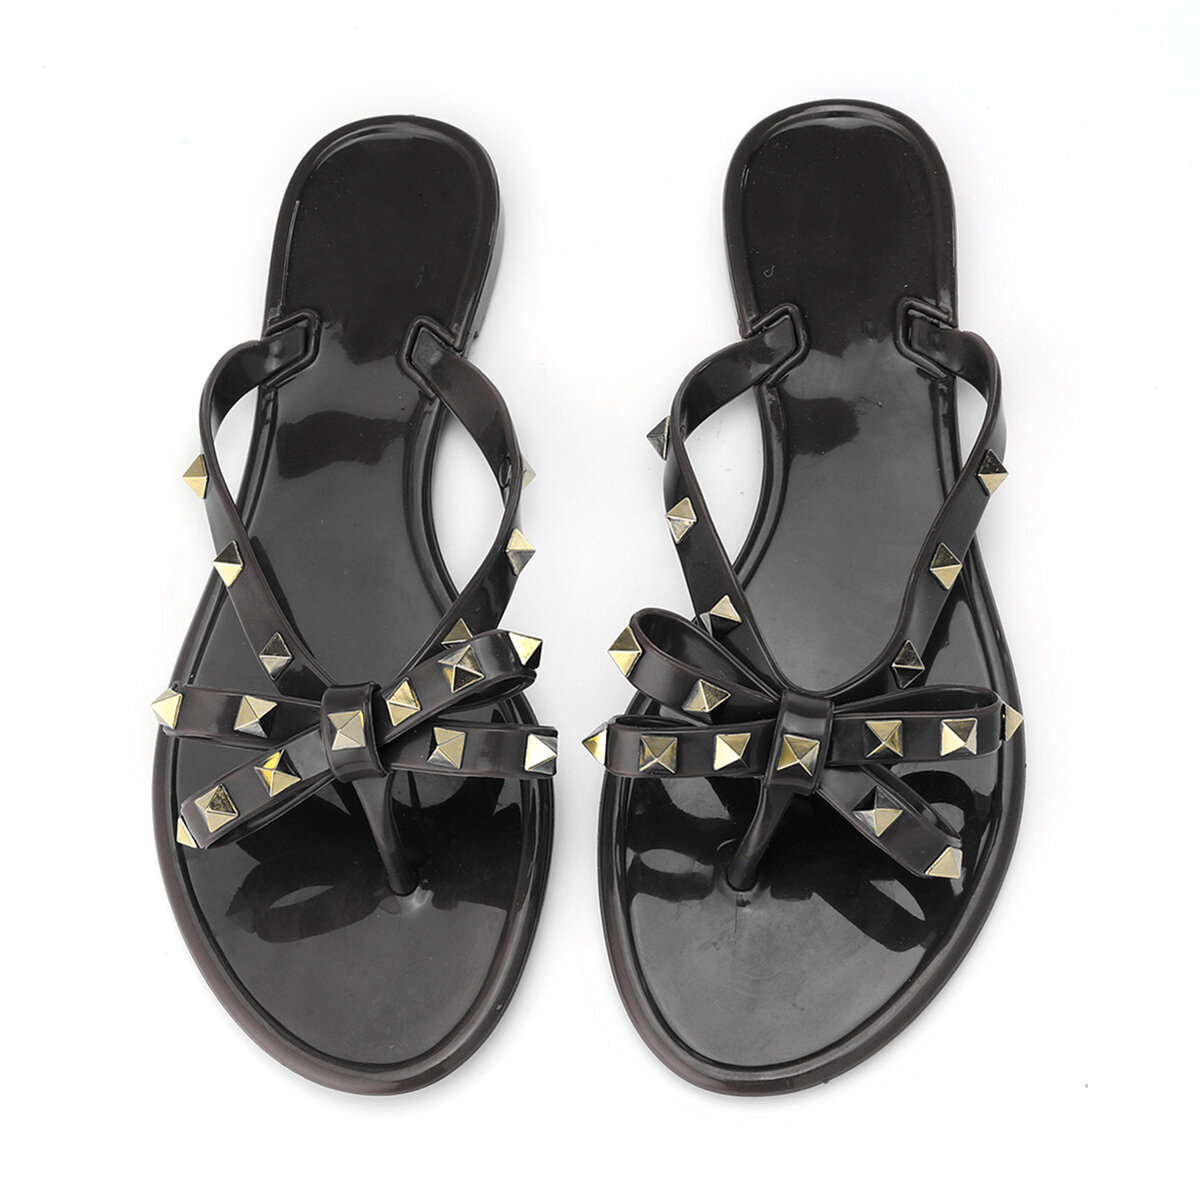 Women's Shoe Sandals Flip Flops Bow tie Flat Slipper Beach Rain Fashion Jelly Color Sandals